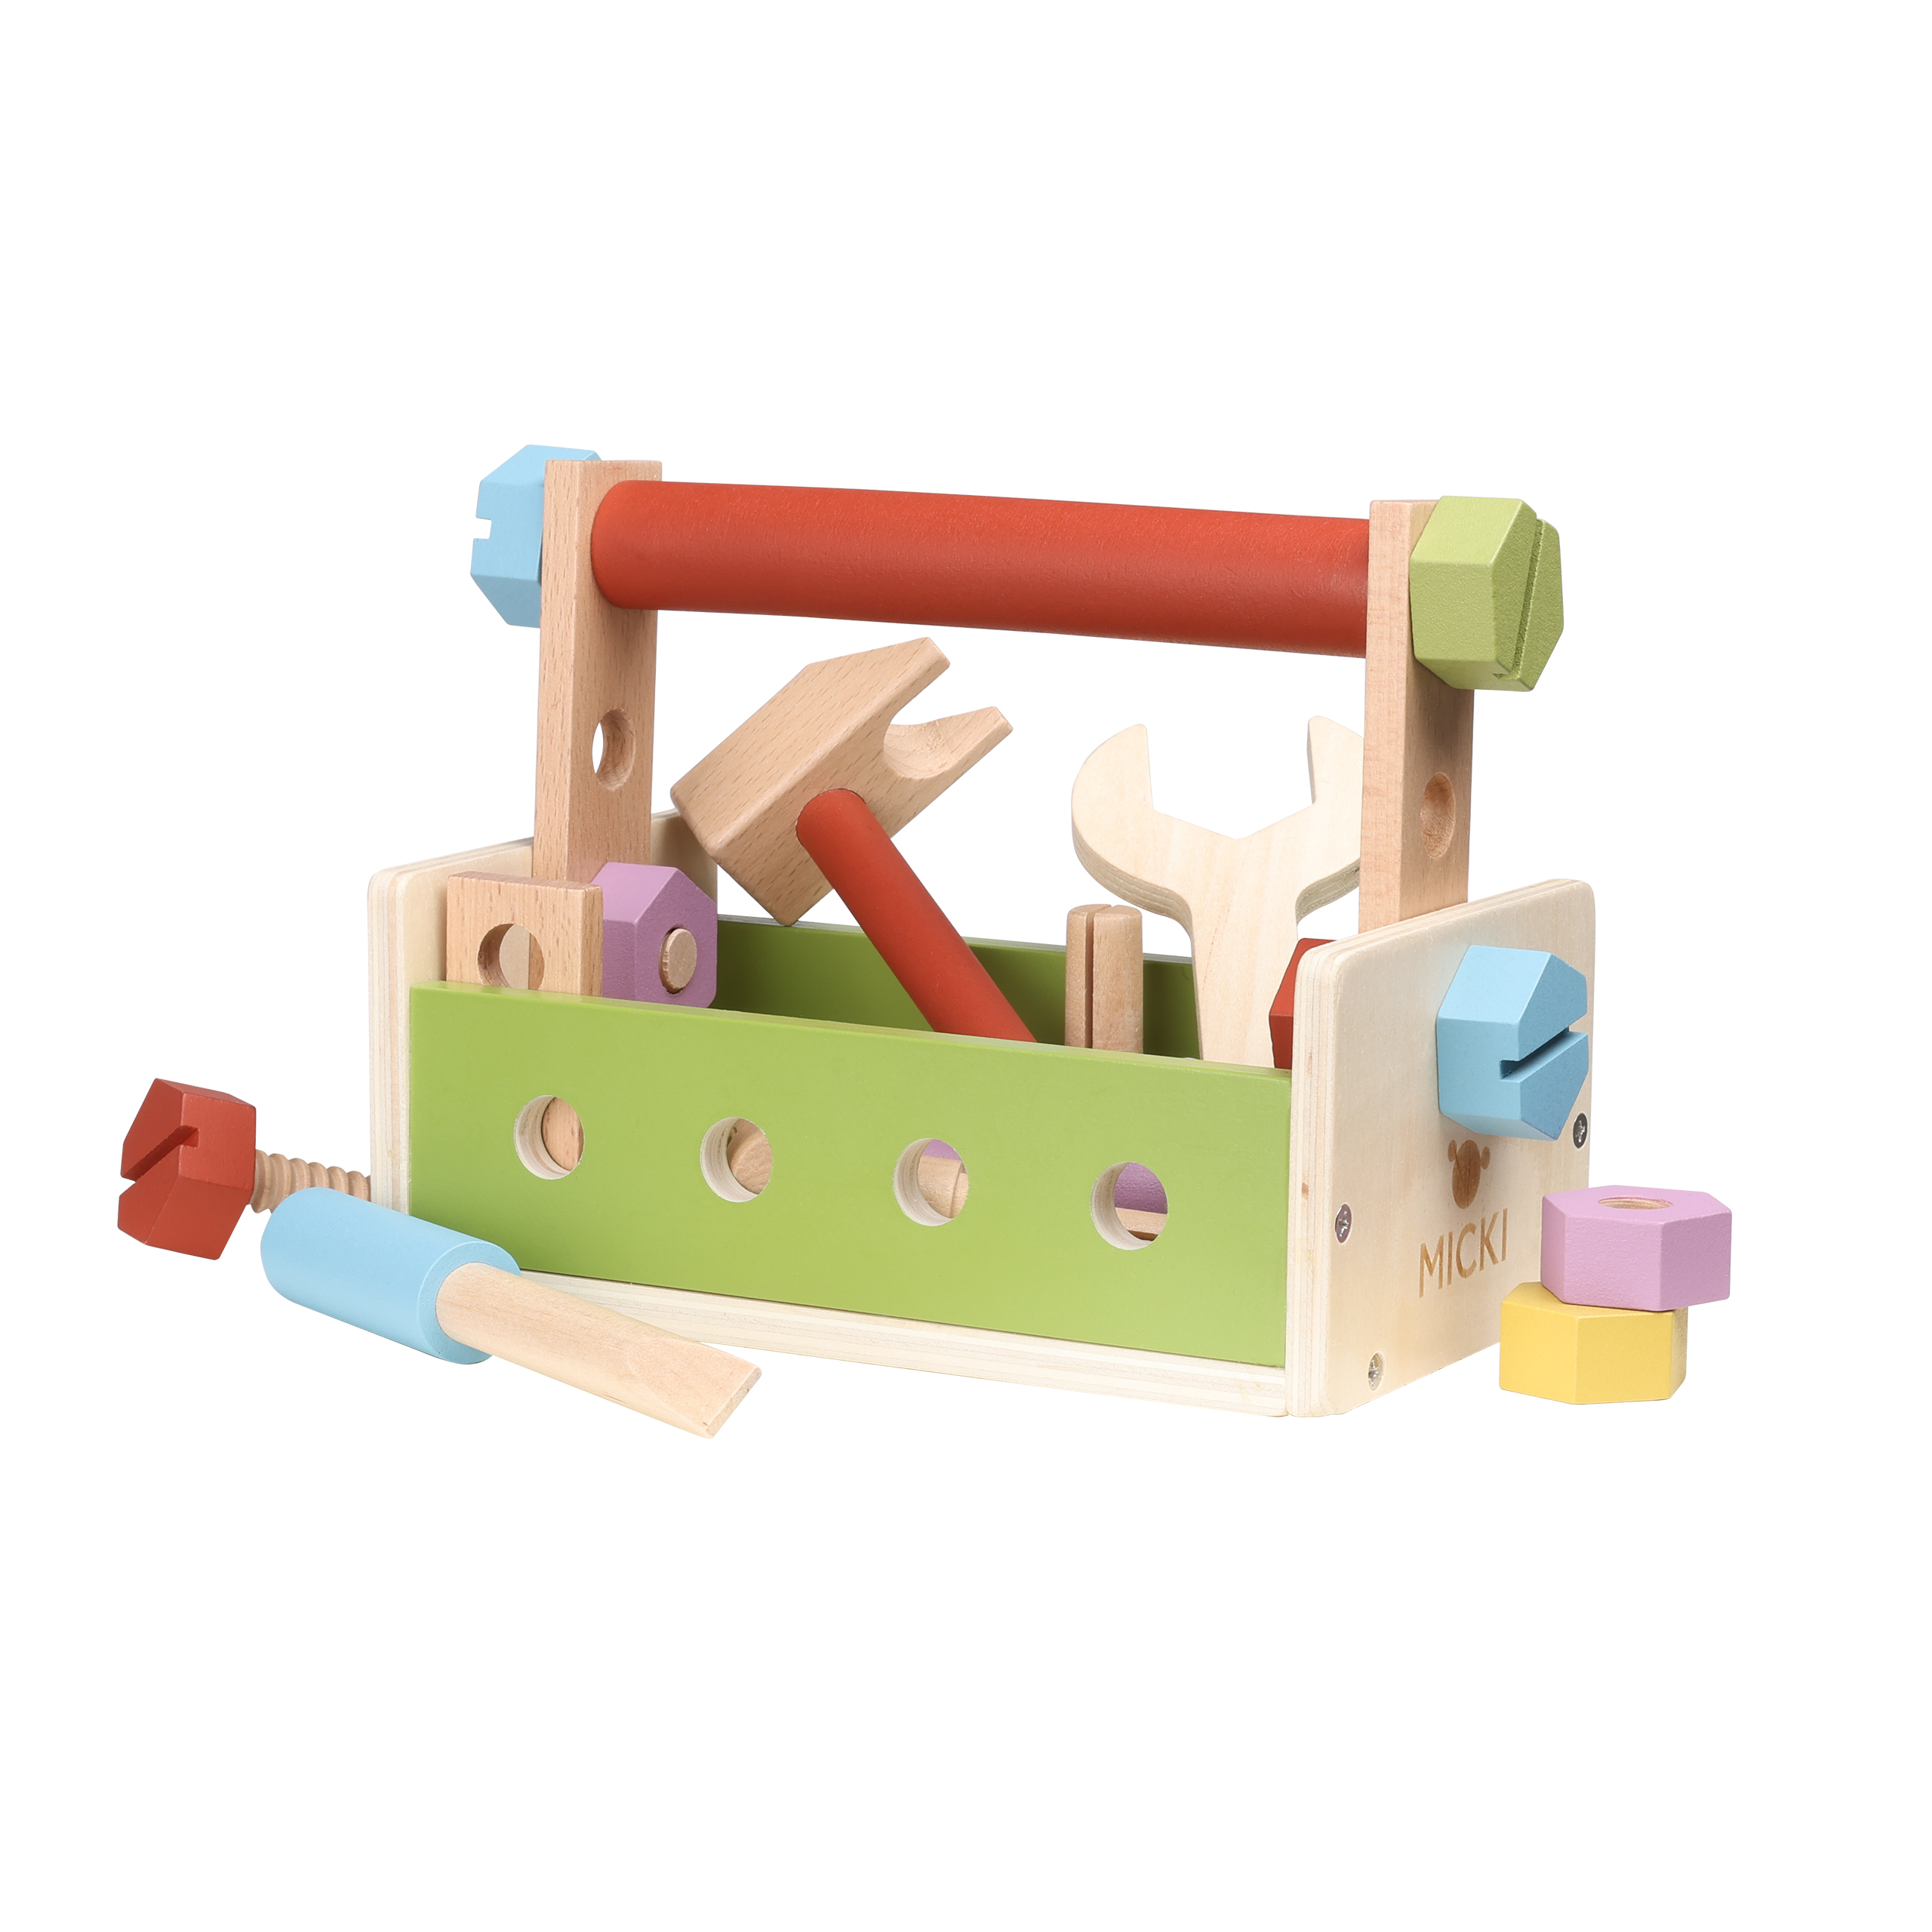 Kids’ costumes micki tool box wooden